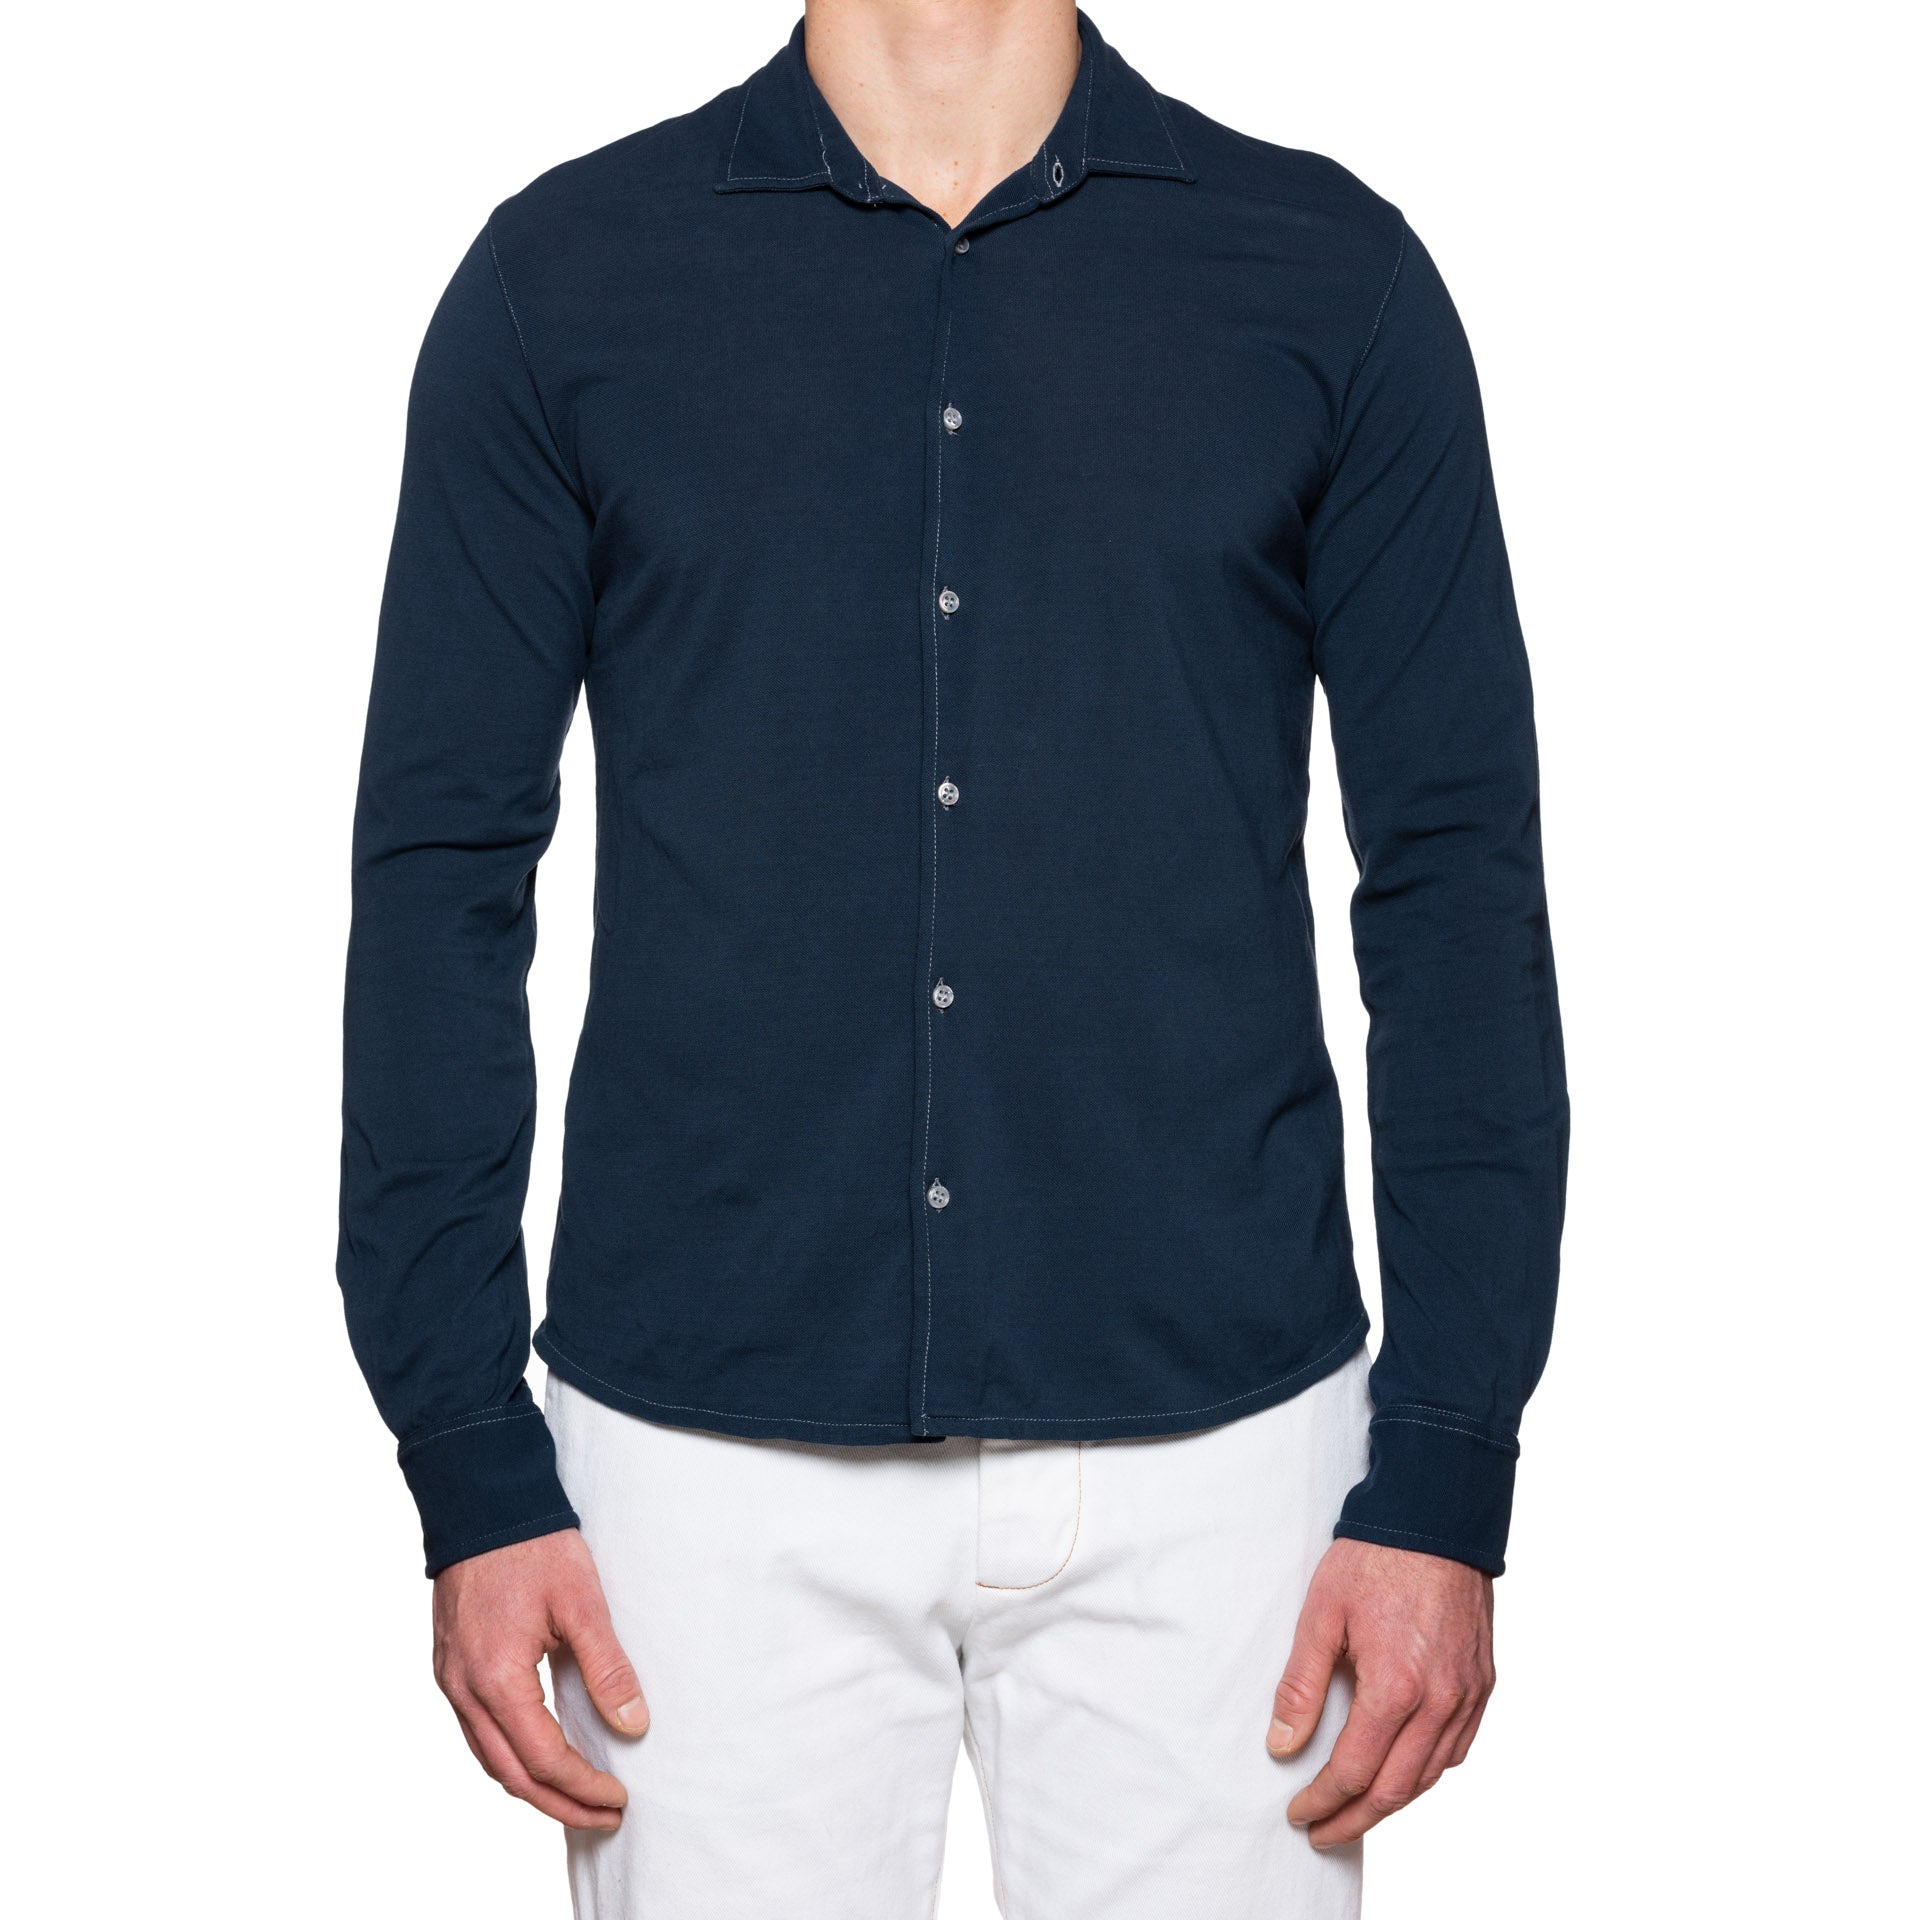 FEDELI "Kaos" Navy Blue Garment Dyed Cotton Pique Shirt 50 NEW M Slim FEDELI